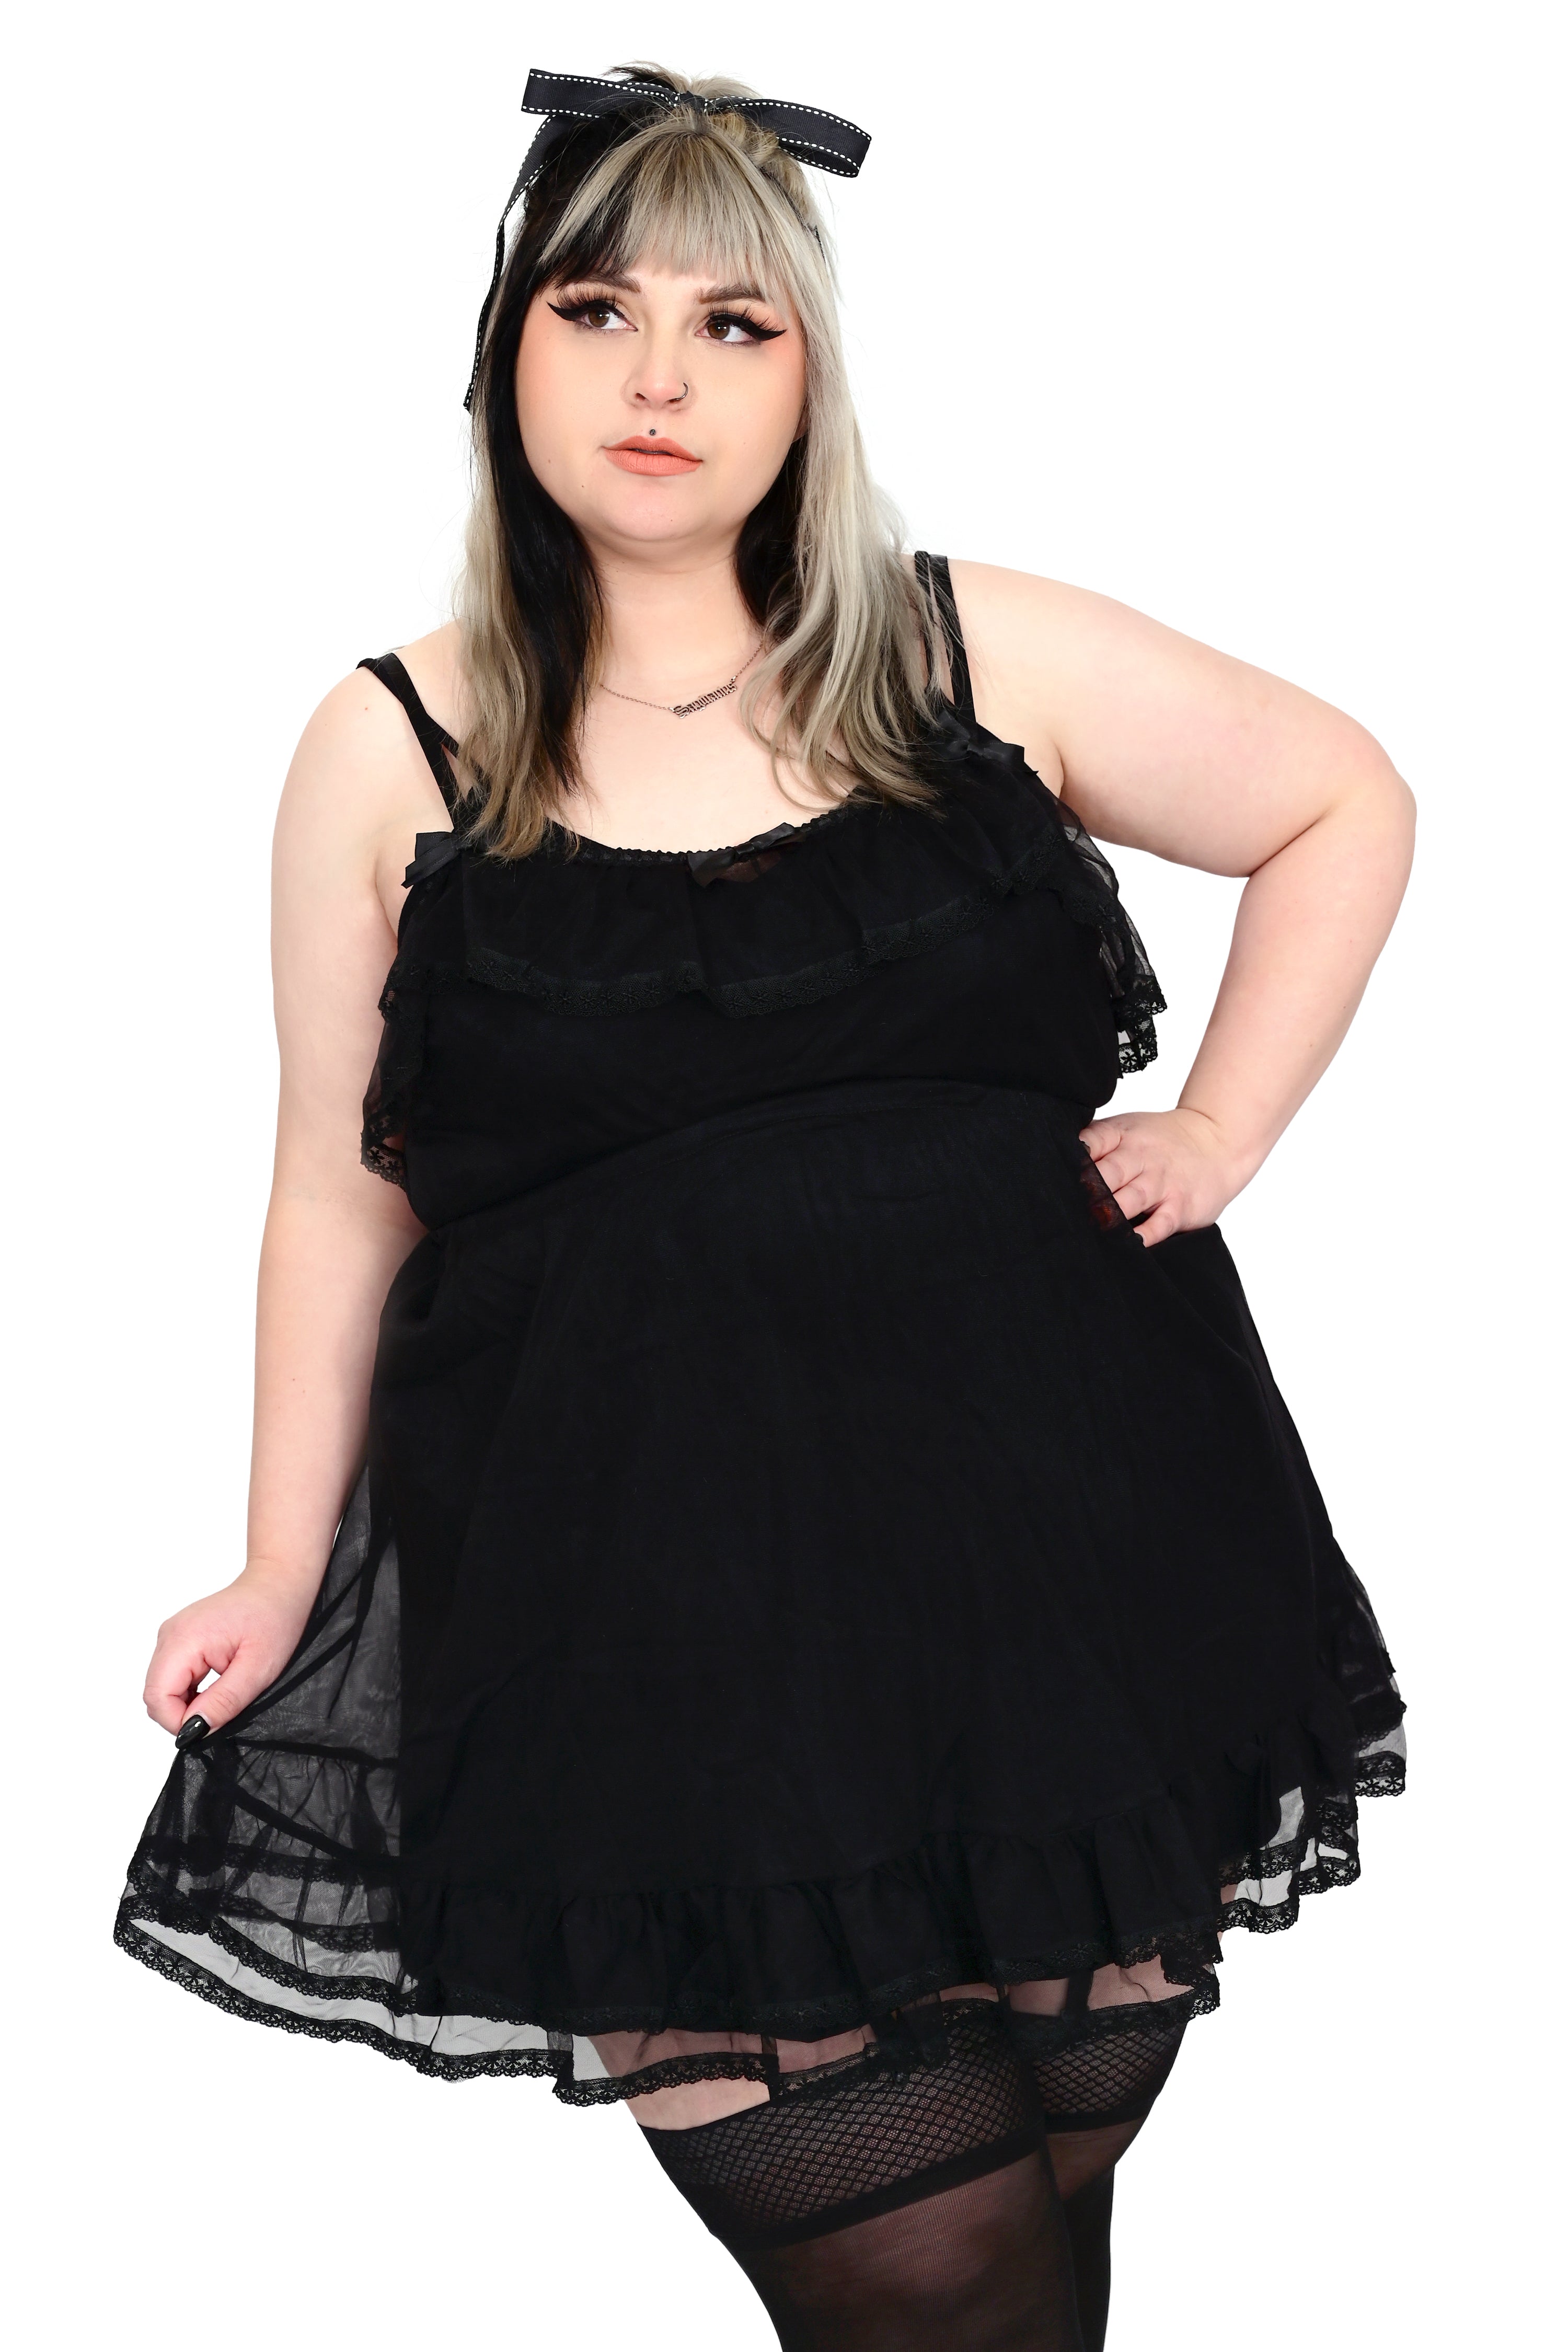 Powder Room Babydoll Dress - Black - Small left!